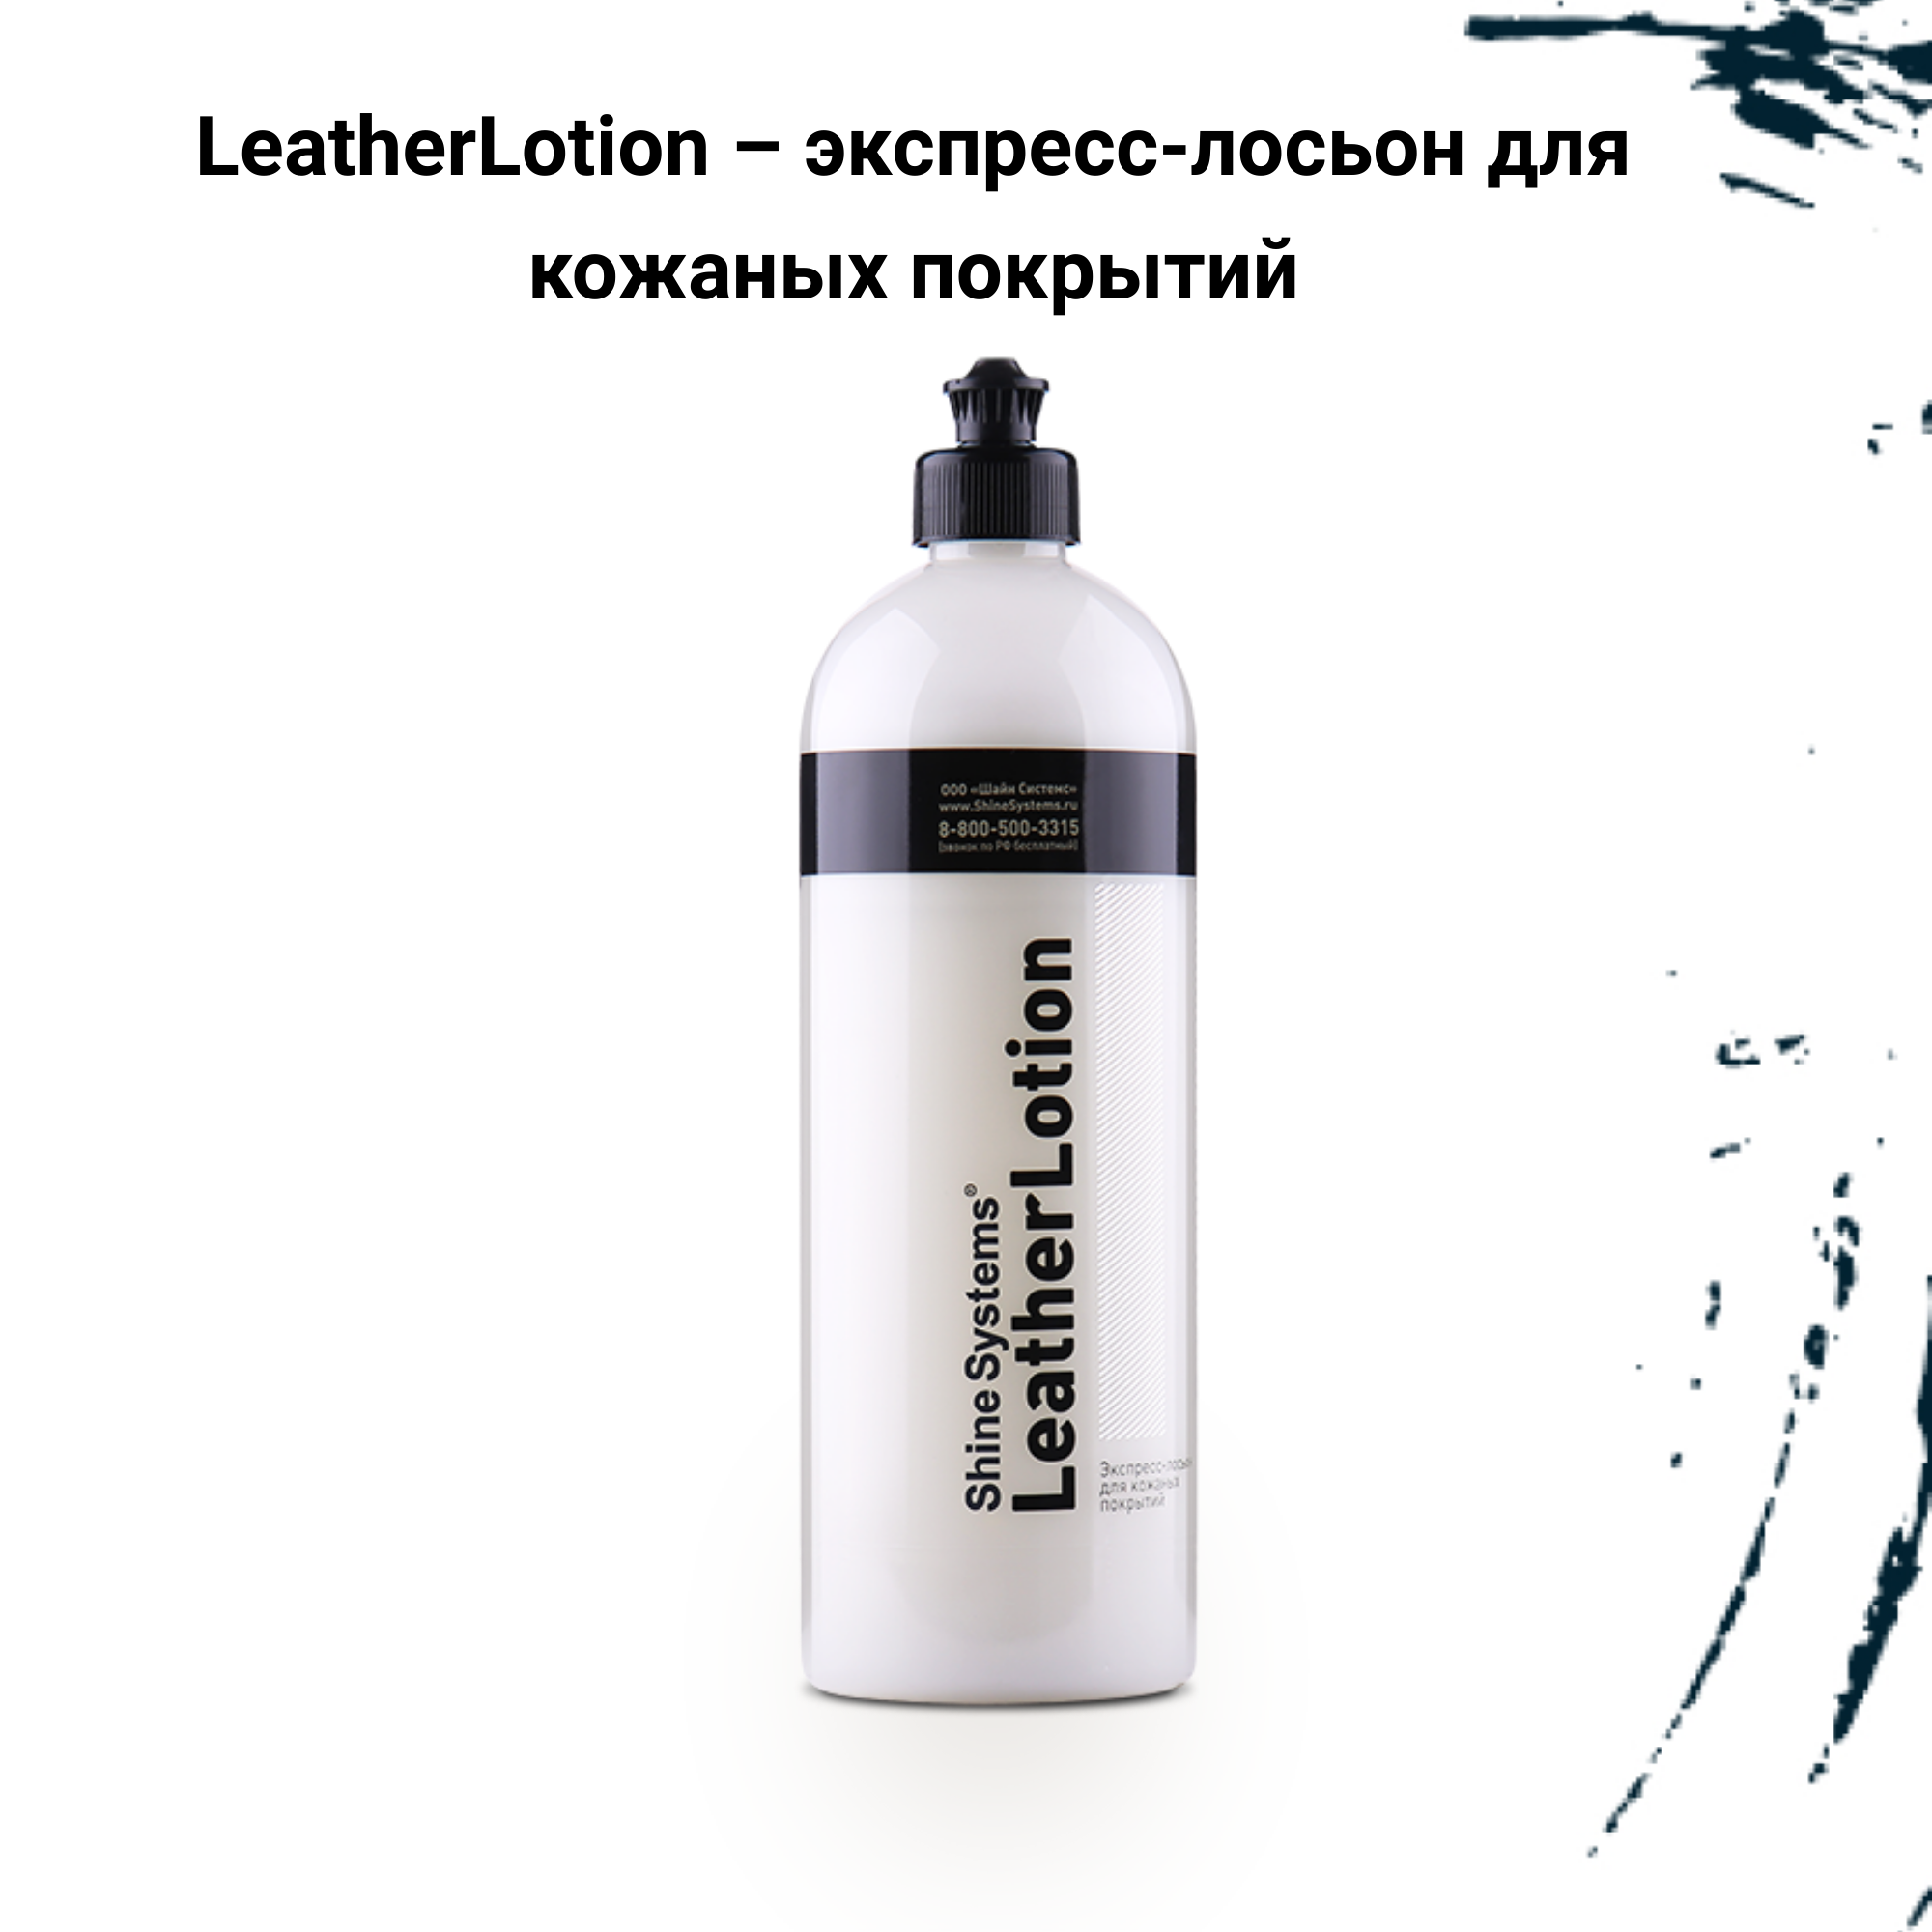 Leather Lotion – Лосьон для кожаных покрытий, 750мл